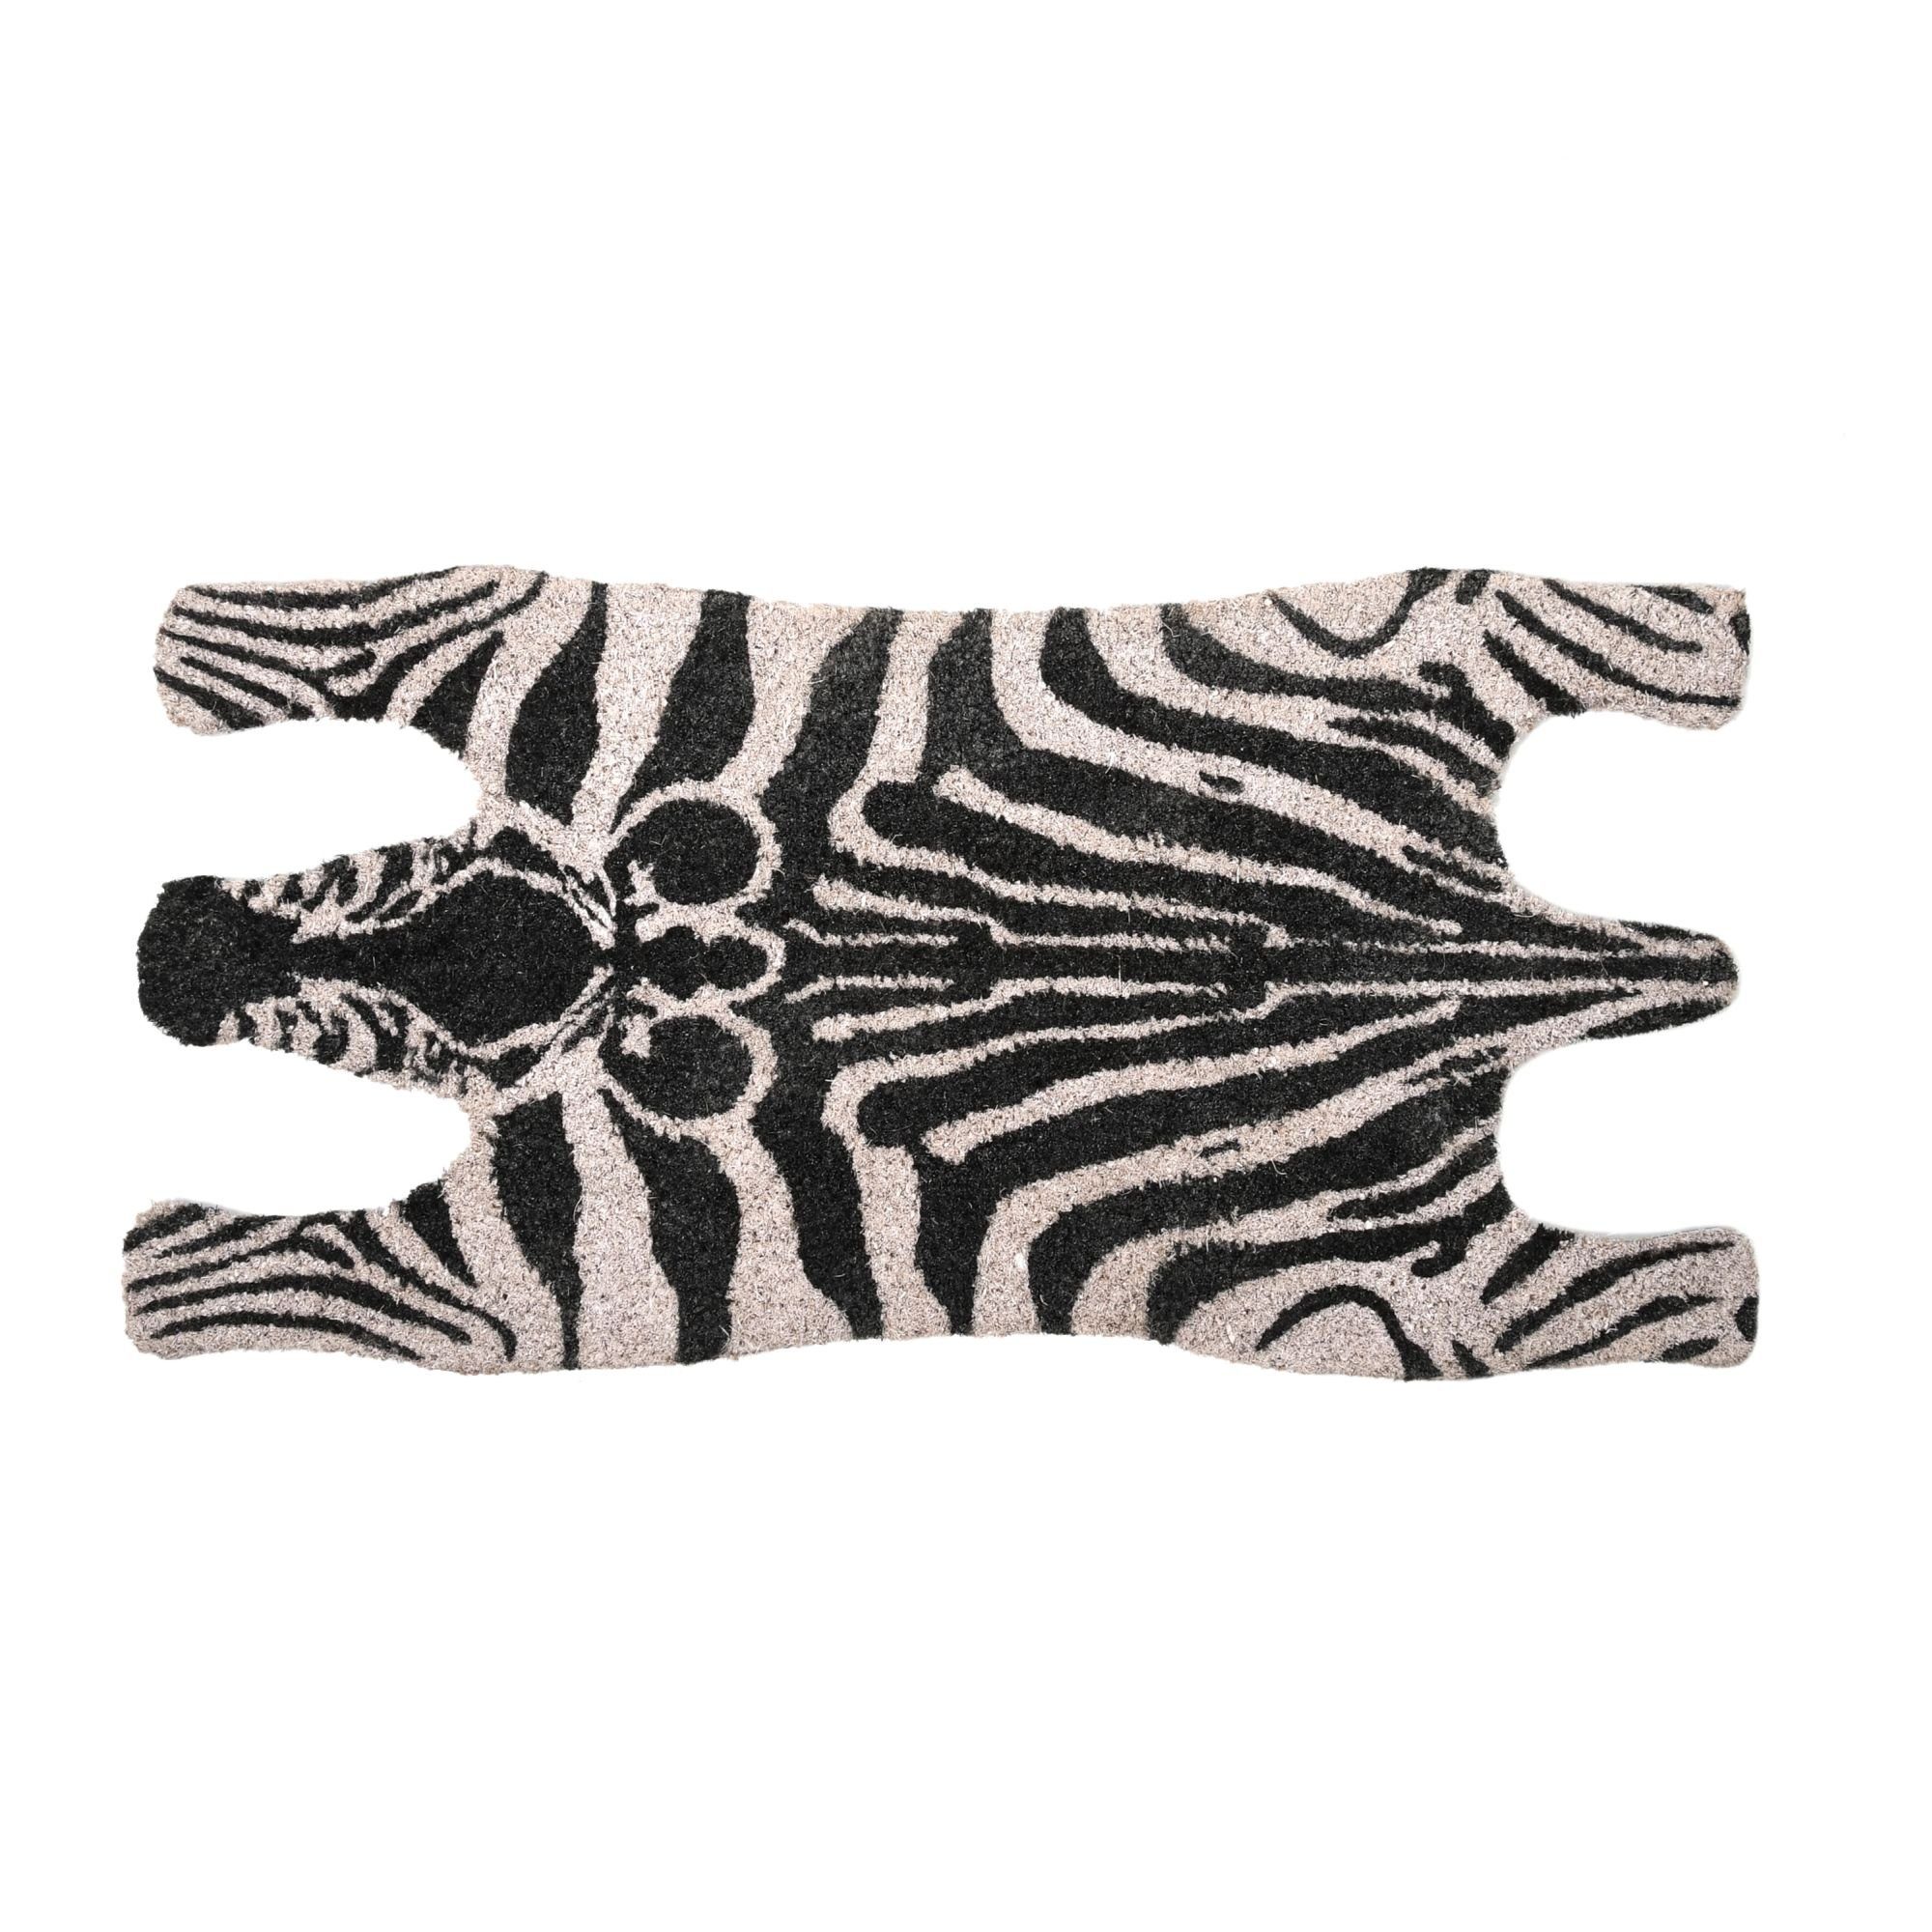 Fußmatte, Rivanto, Türmatte mit Zebra-Motiv aus Kokosfasern, L38 x B 75 cm 2 cm dick